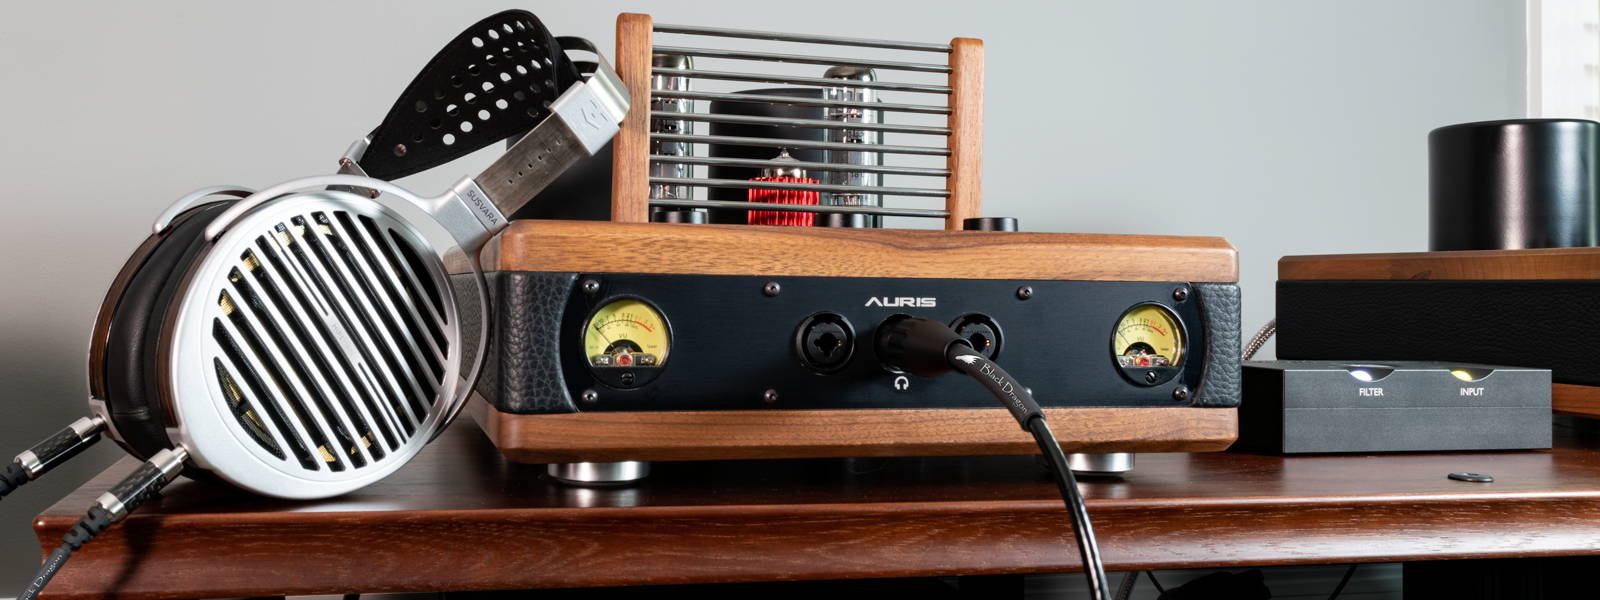 HiFiMan SUSVARA headphones with Black Dragon Cable and Nirvana tube amp from Auris Audio